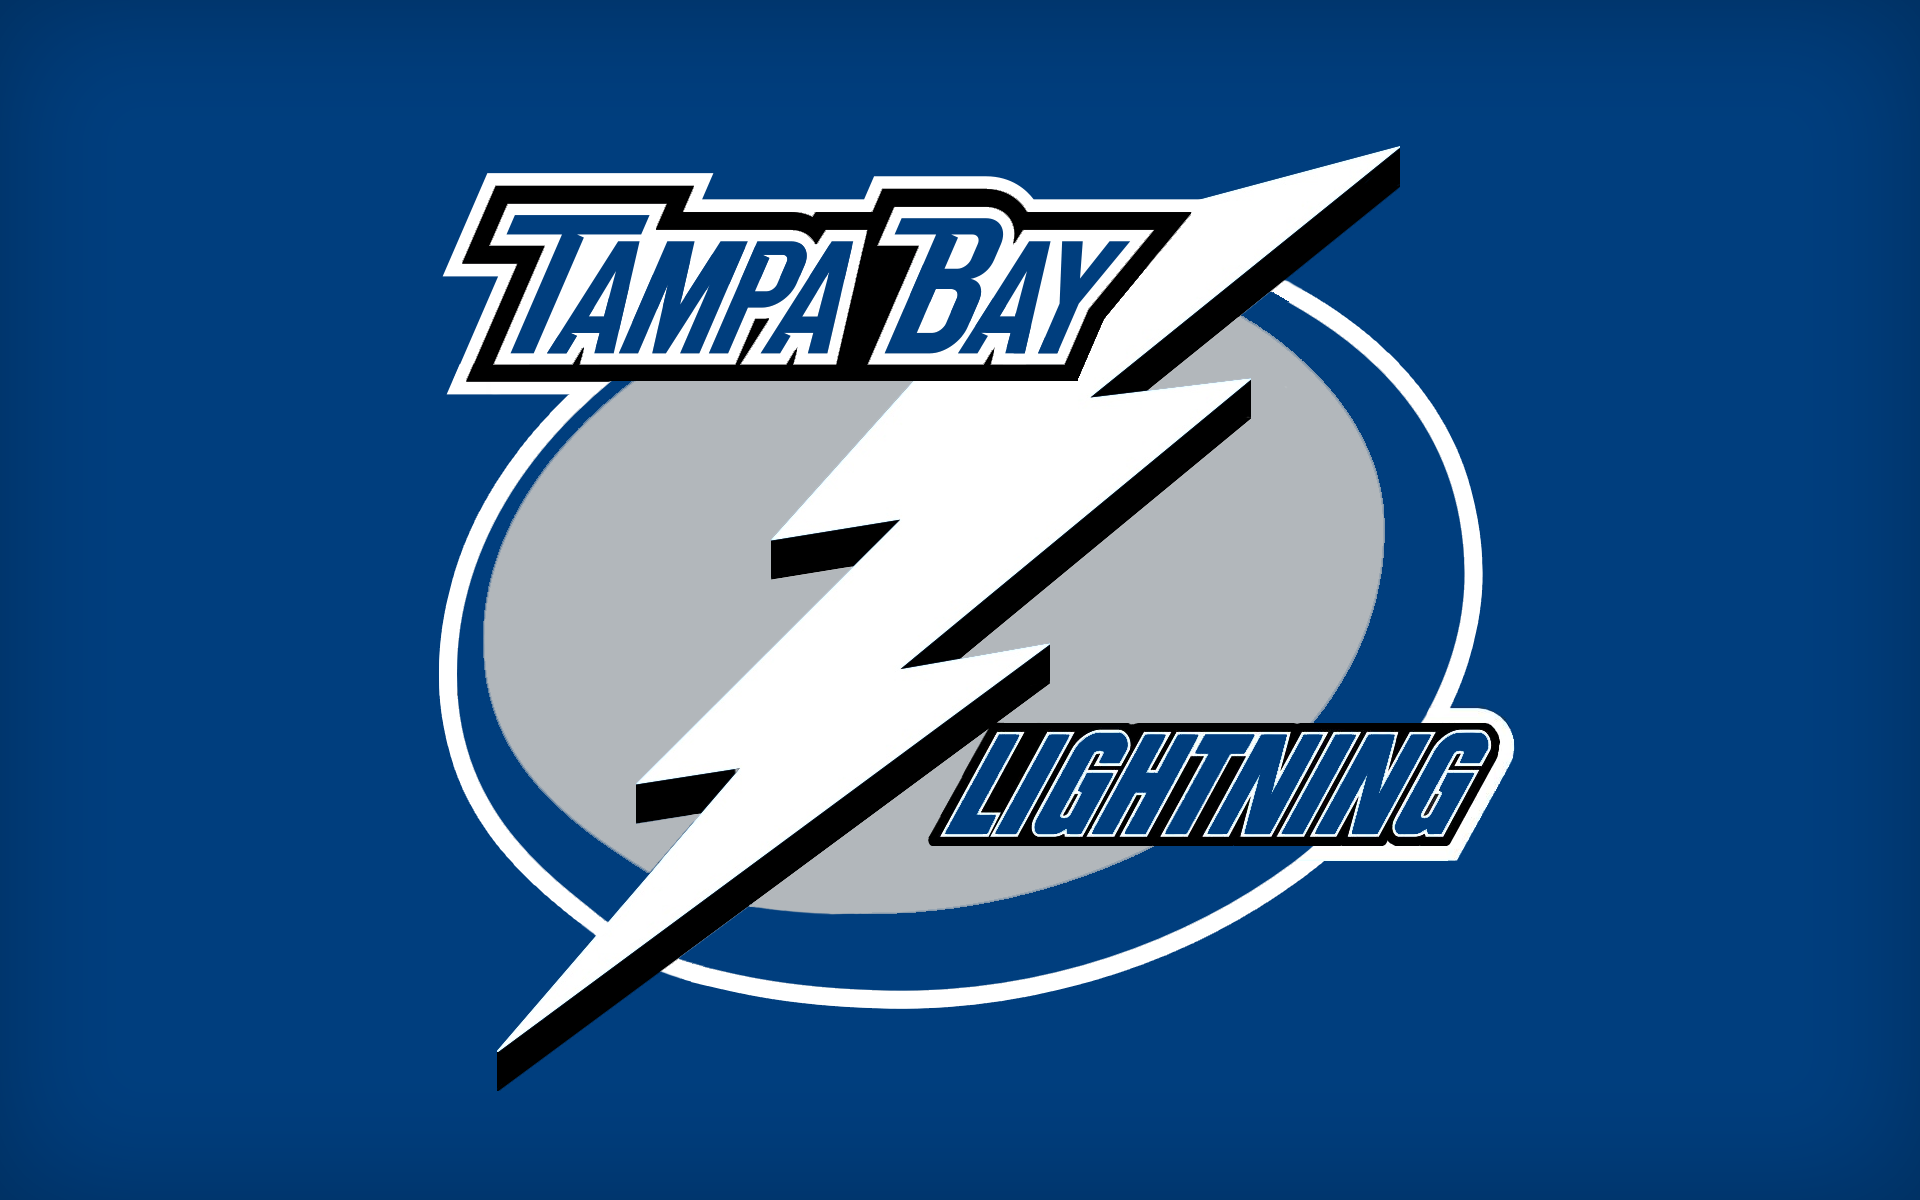 High Resolution Wallpaper | Tampa Bay Lightning 1920x1200 px